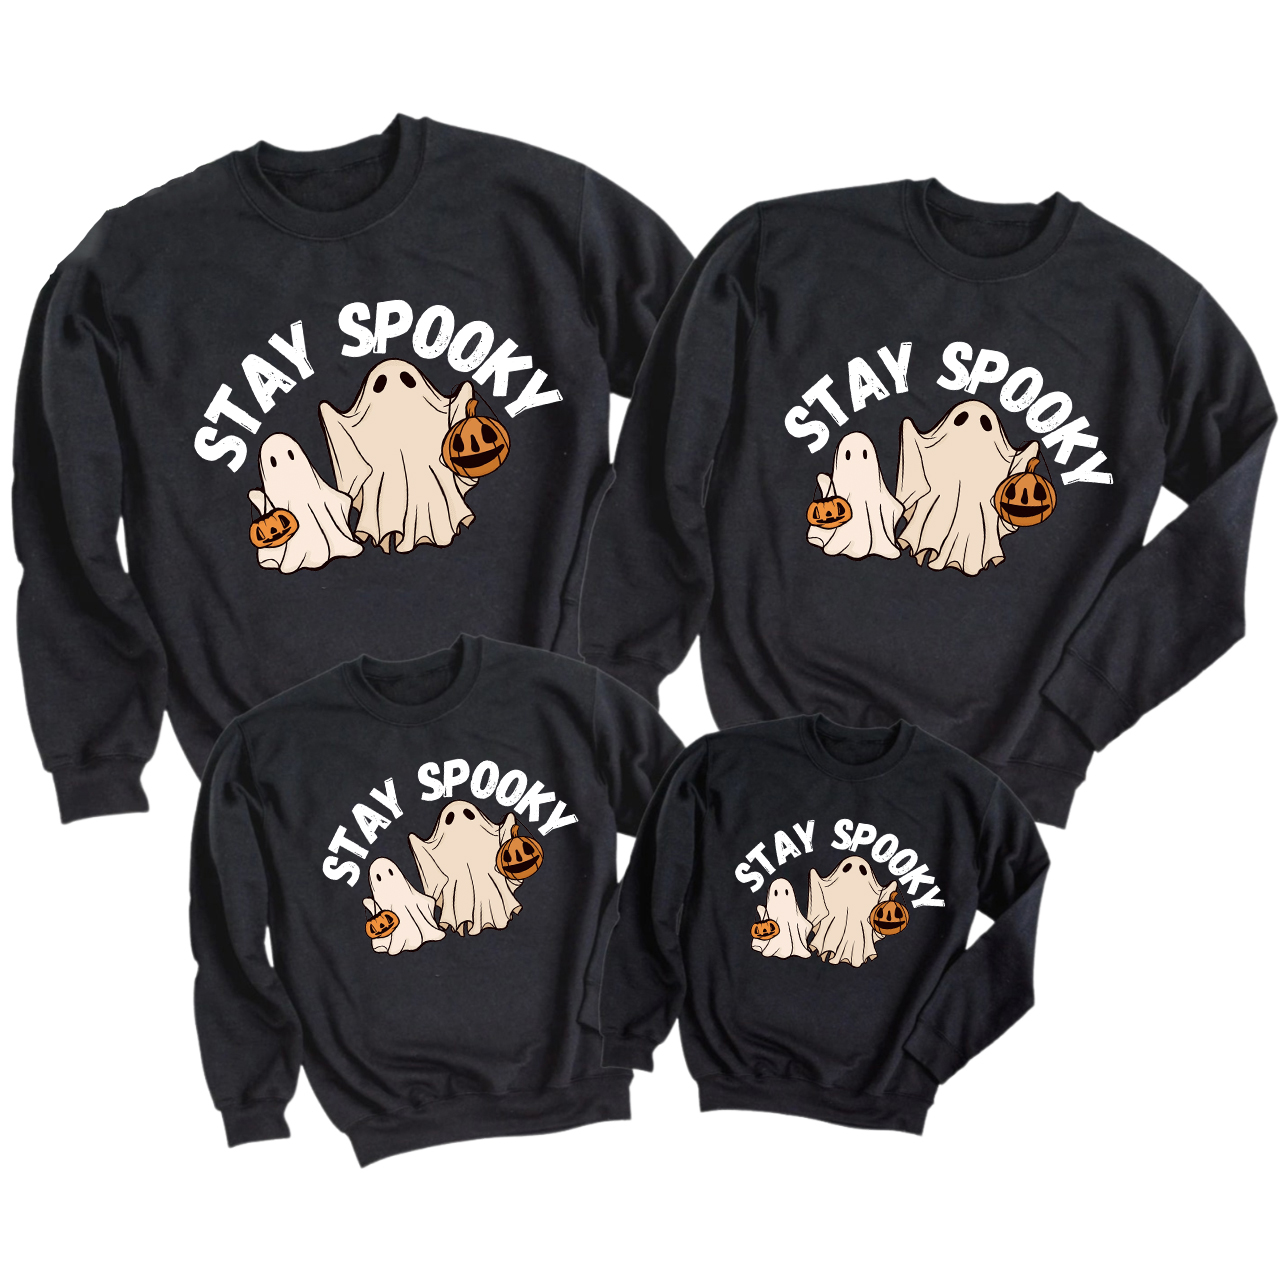 Stay Spooky Halloween Party Sweatshirts